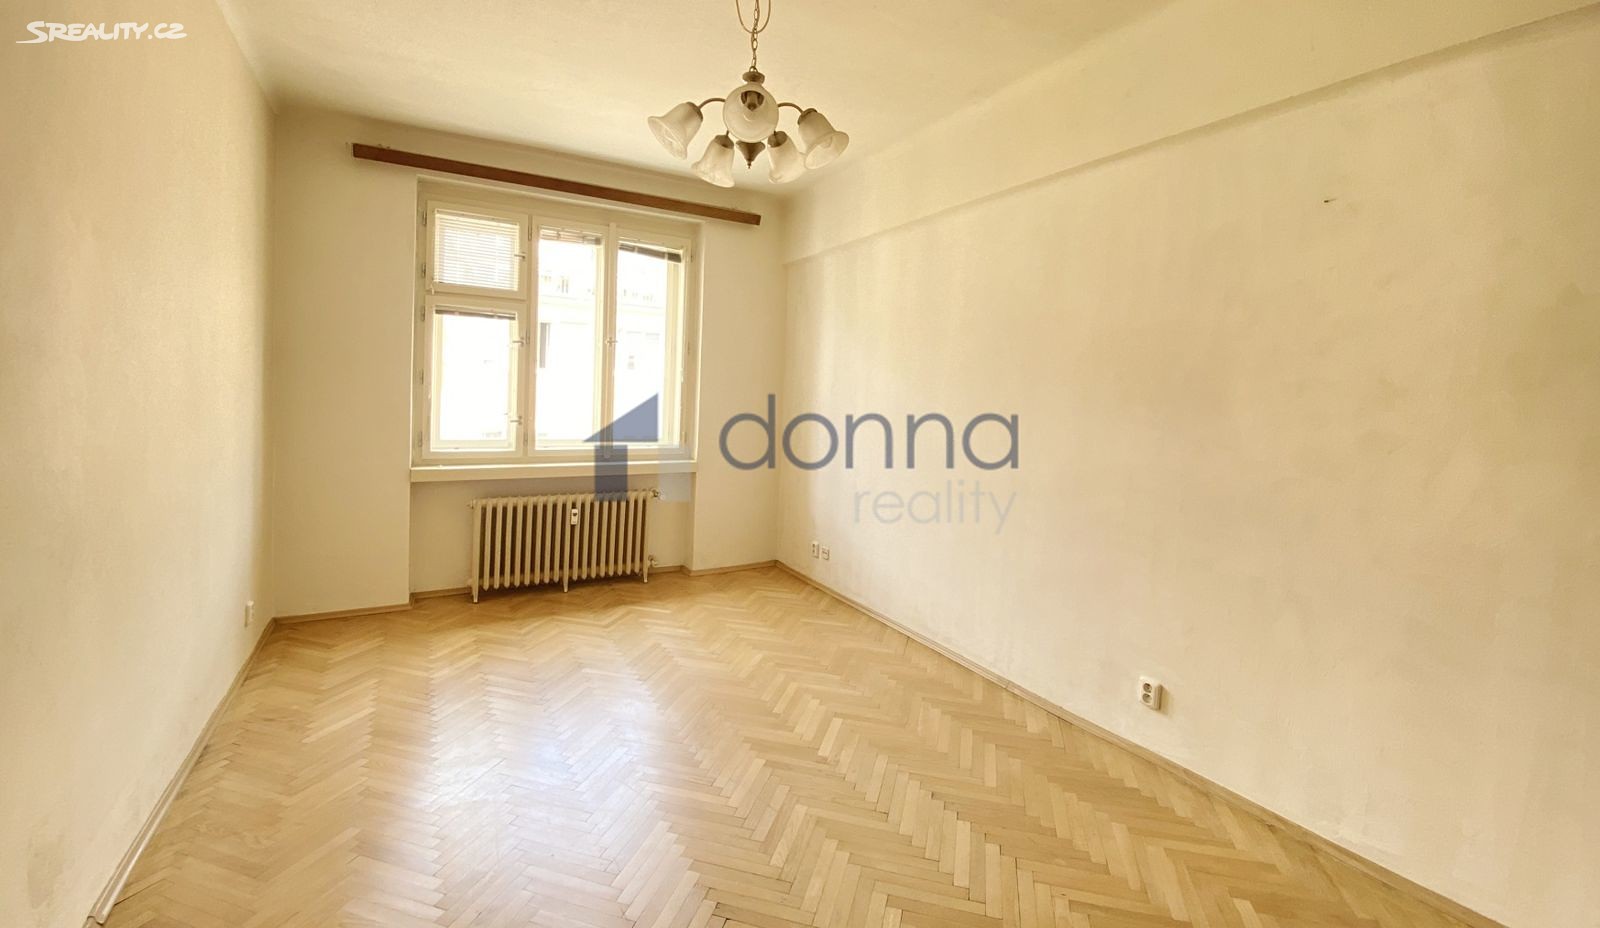 Pronájem bytu 1+kk 24 m², Slezská, Praha 3 - Vinohrady